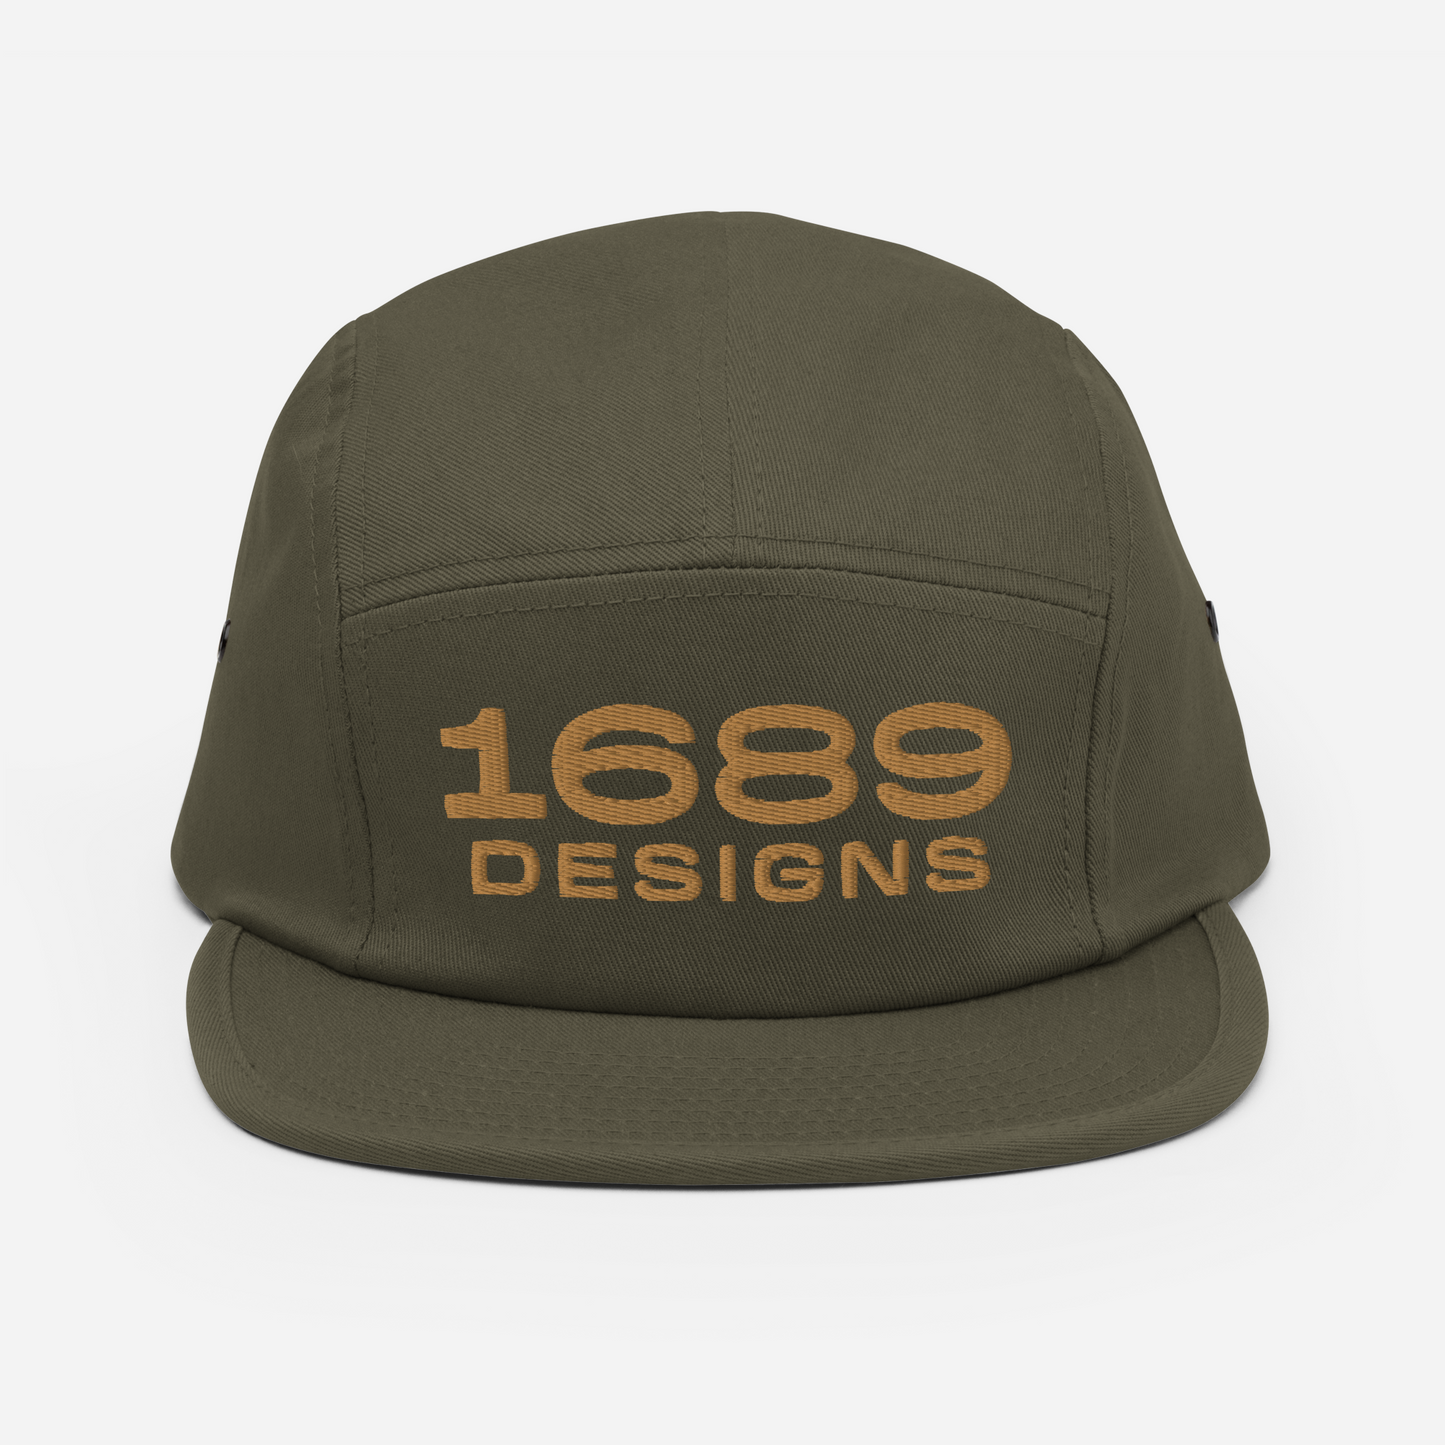 1689 Designs Camper Hat